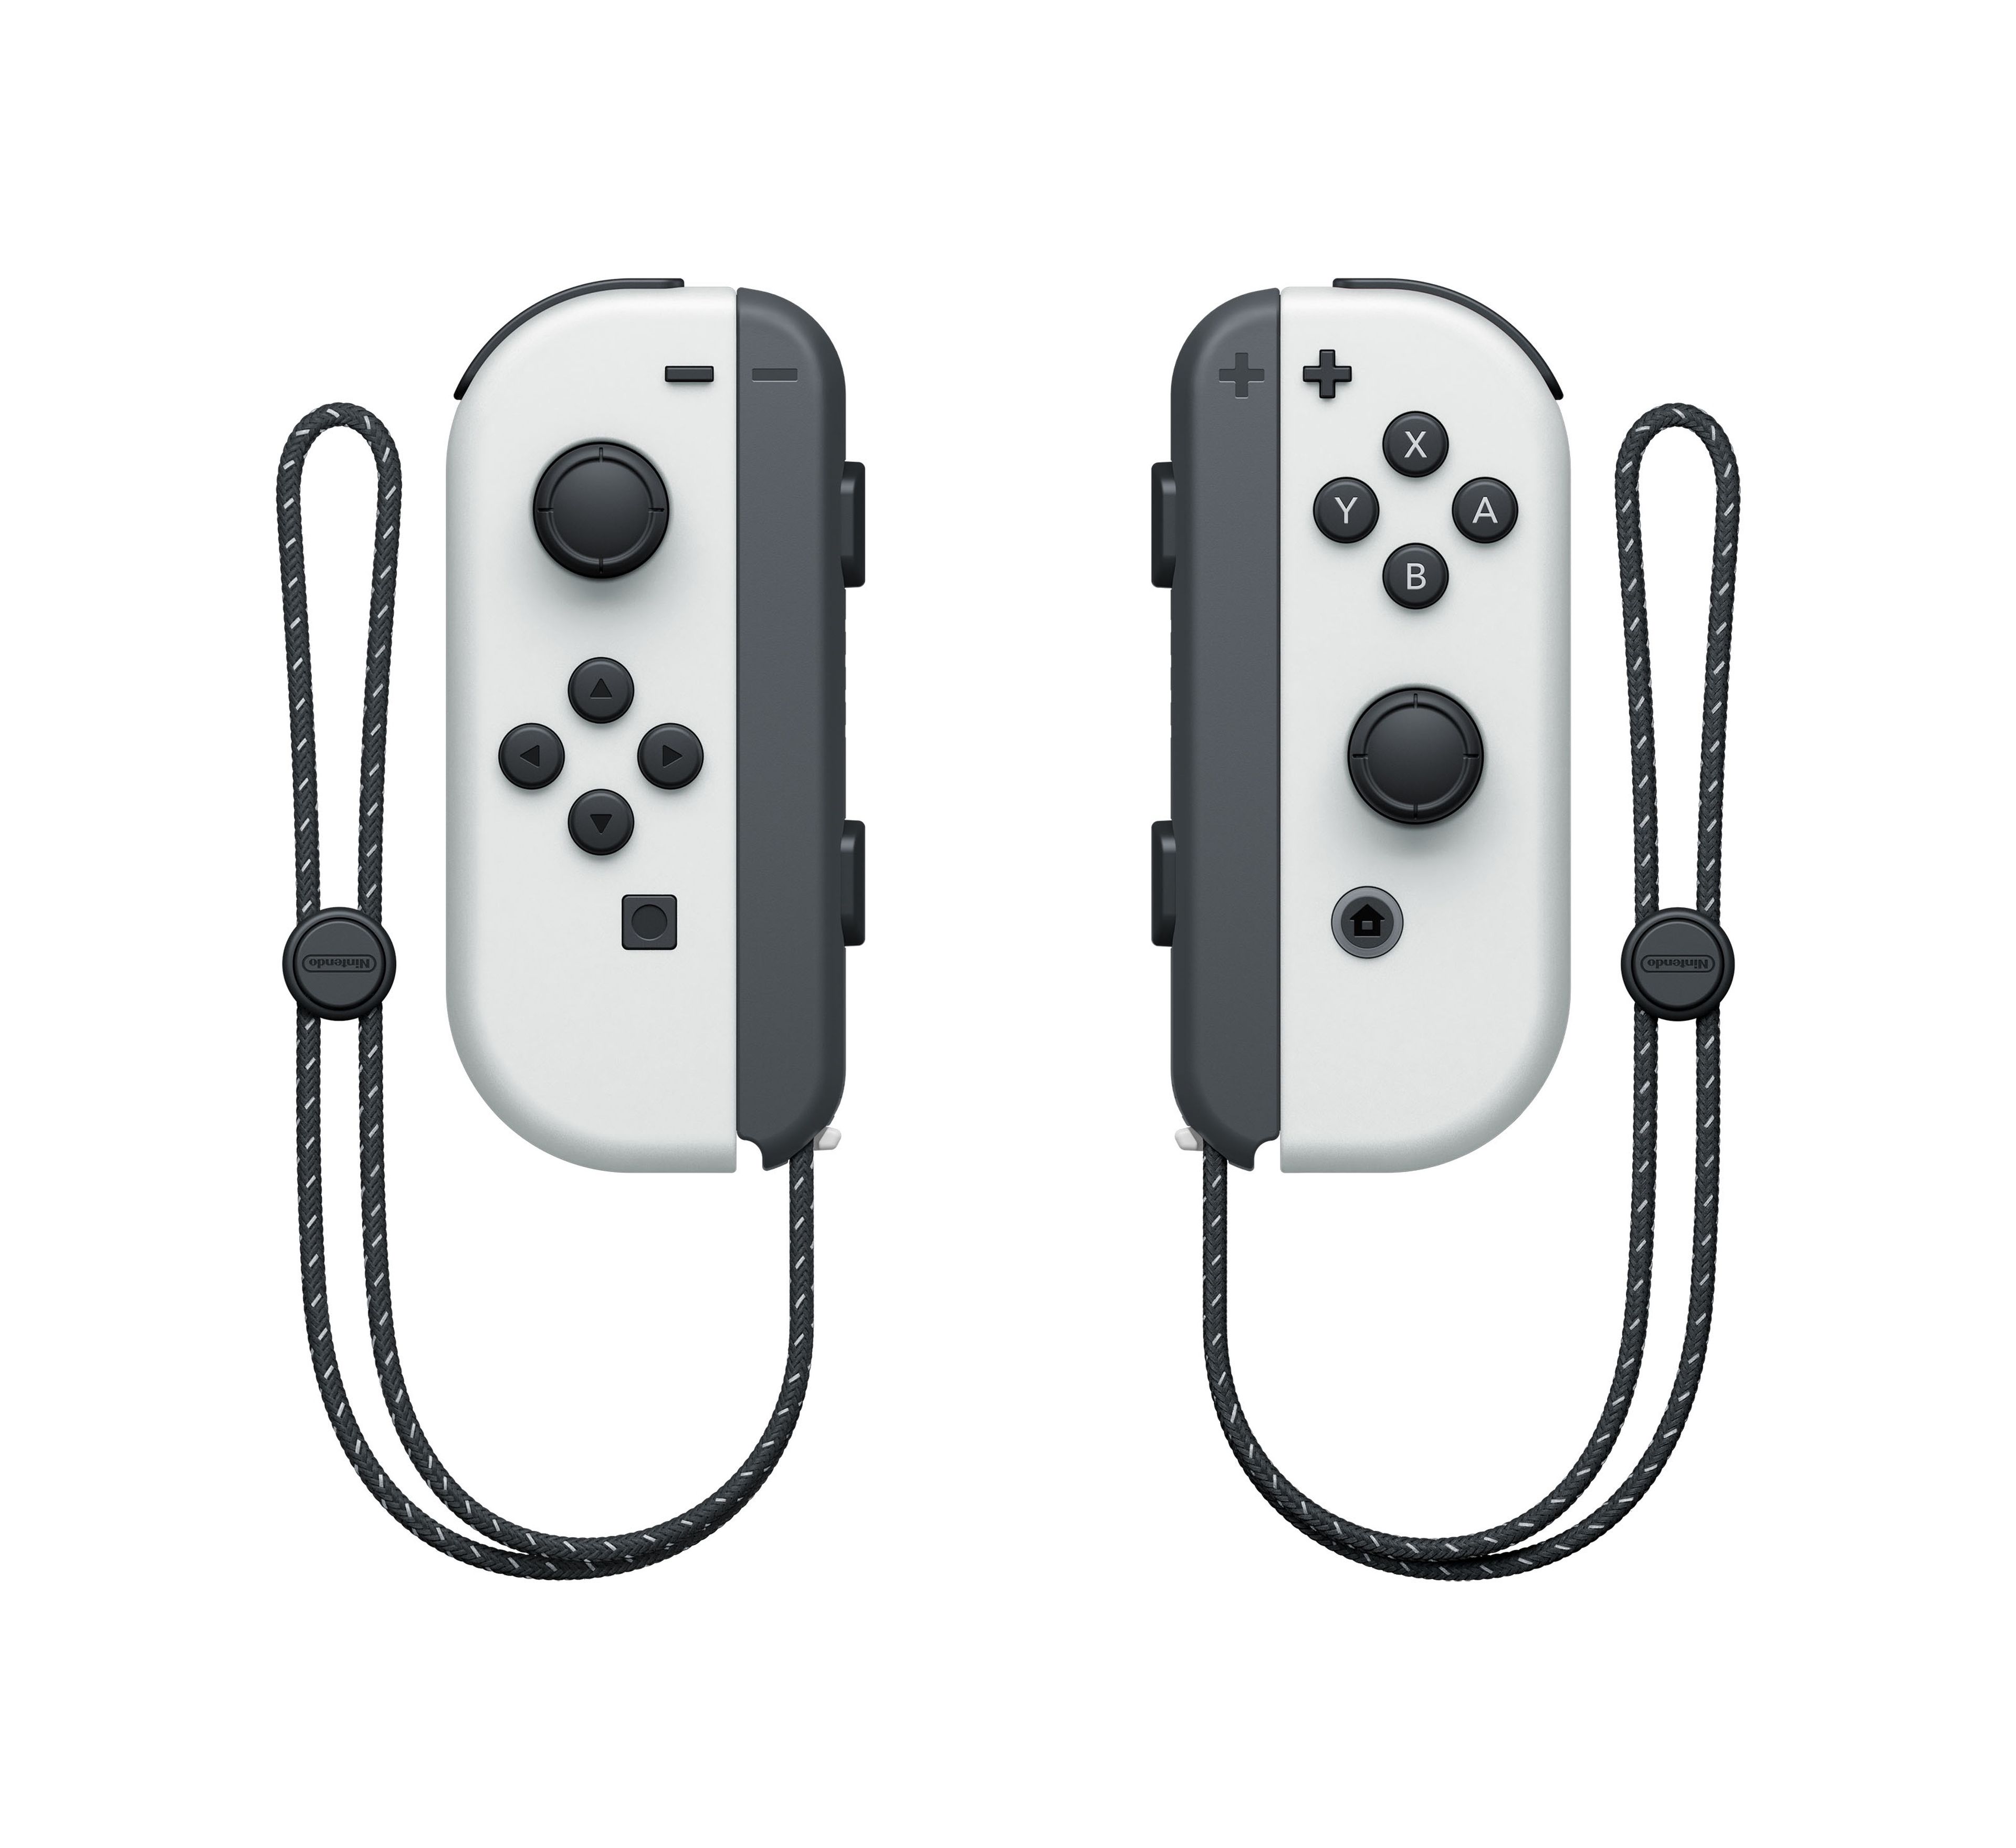 Impresiones Nintendo Switch OLED JoyCon